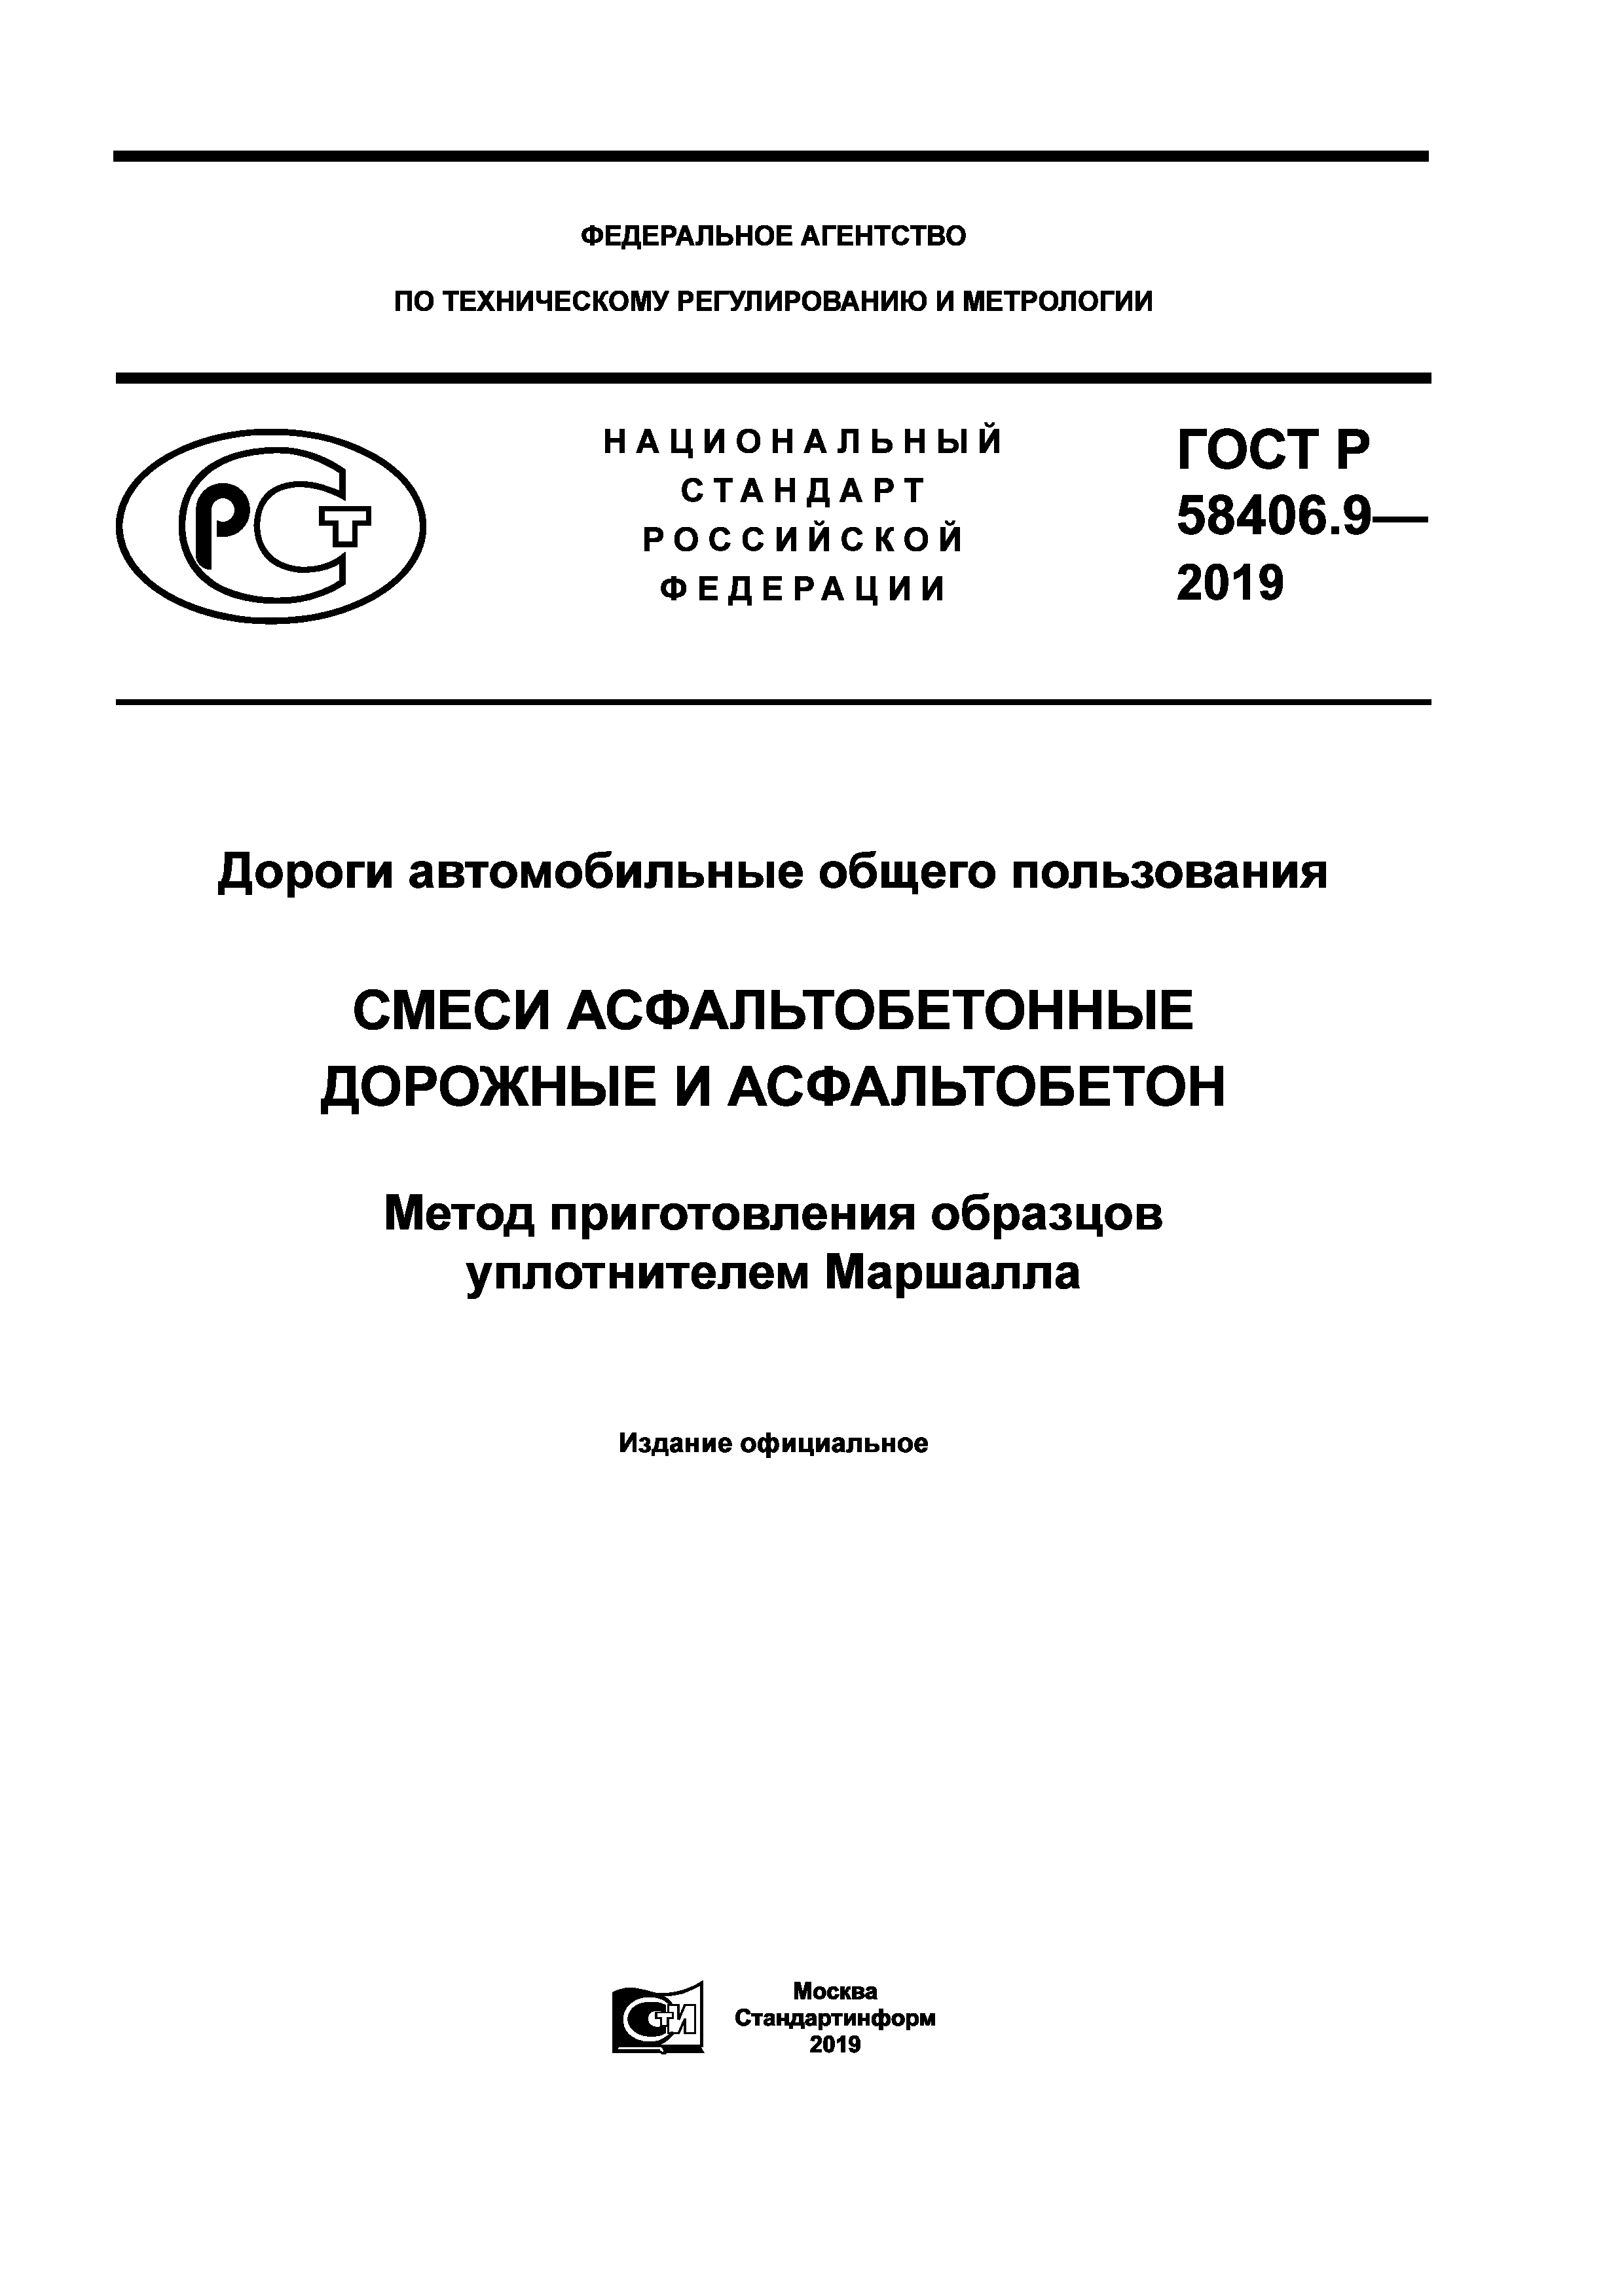 ГОСТ Р 58406.9-2019